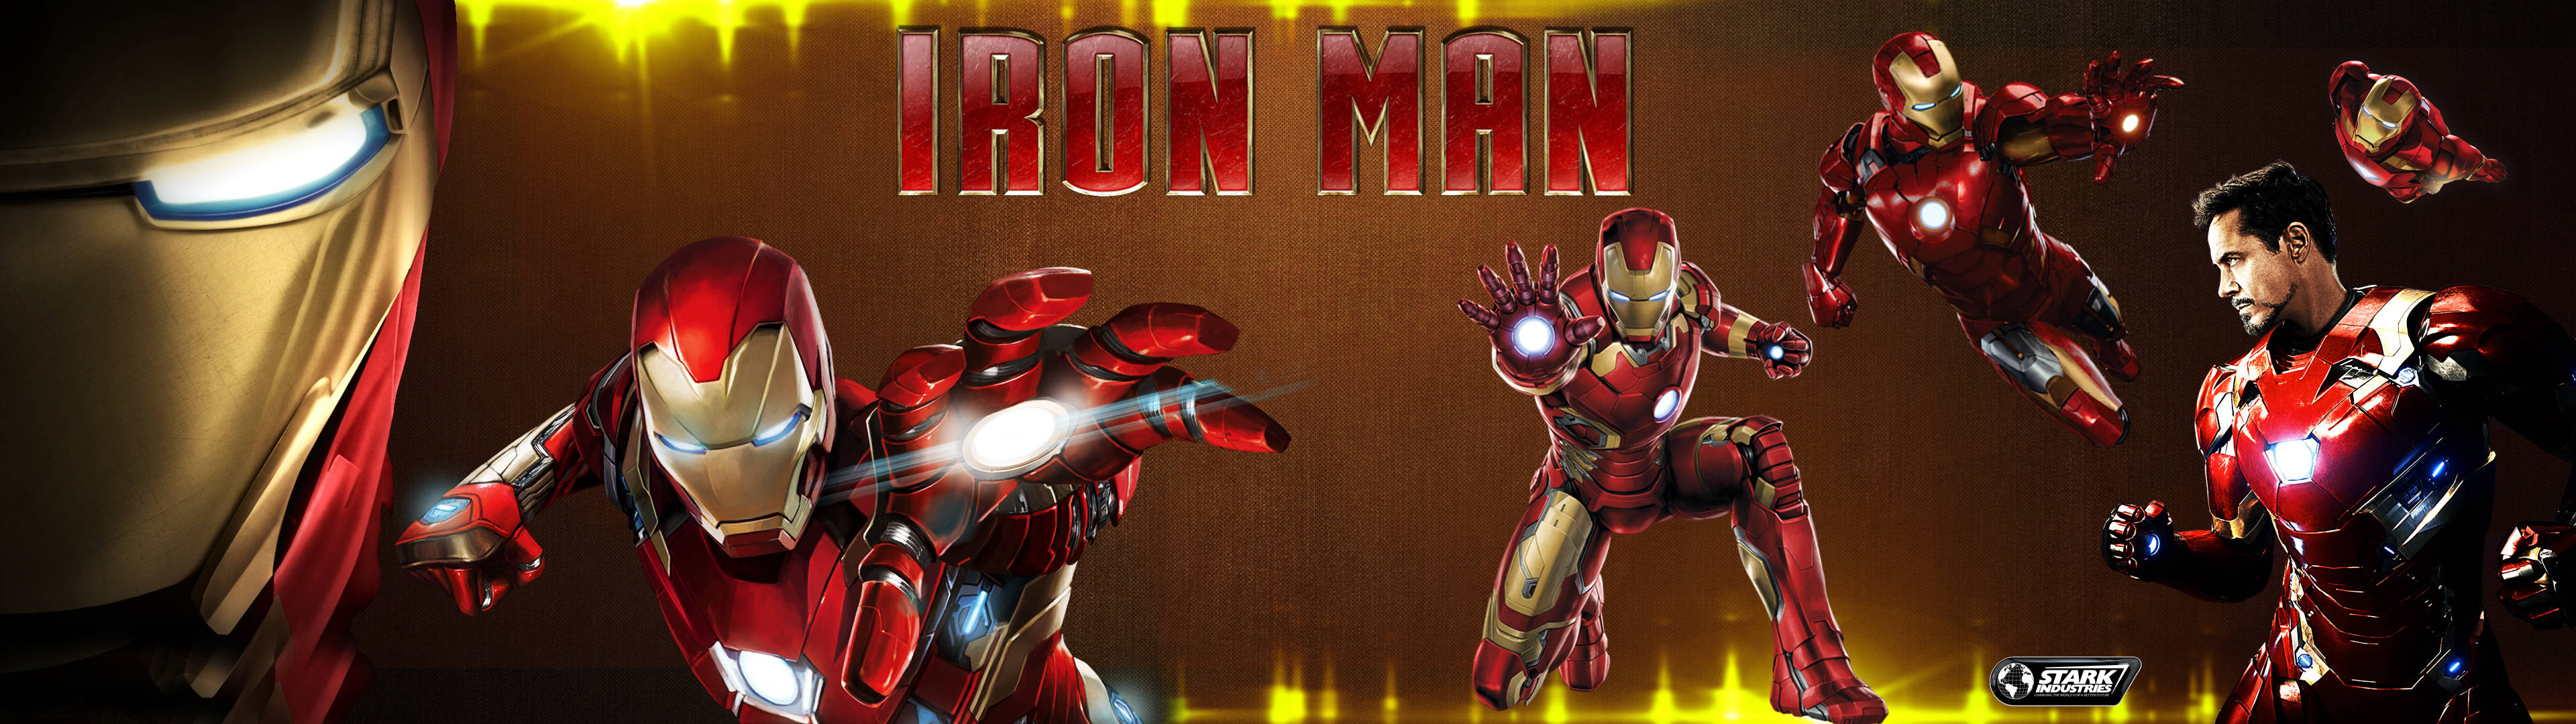 Iron Man Office Desktop Background Wallpaper